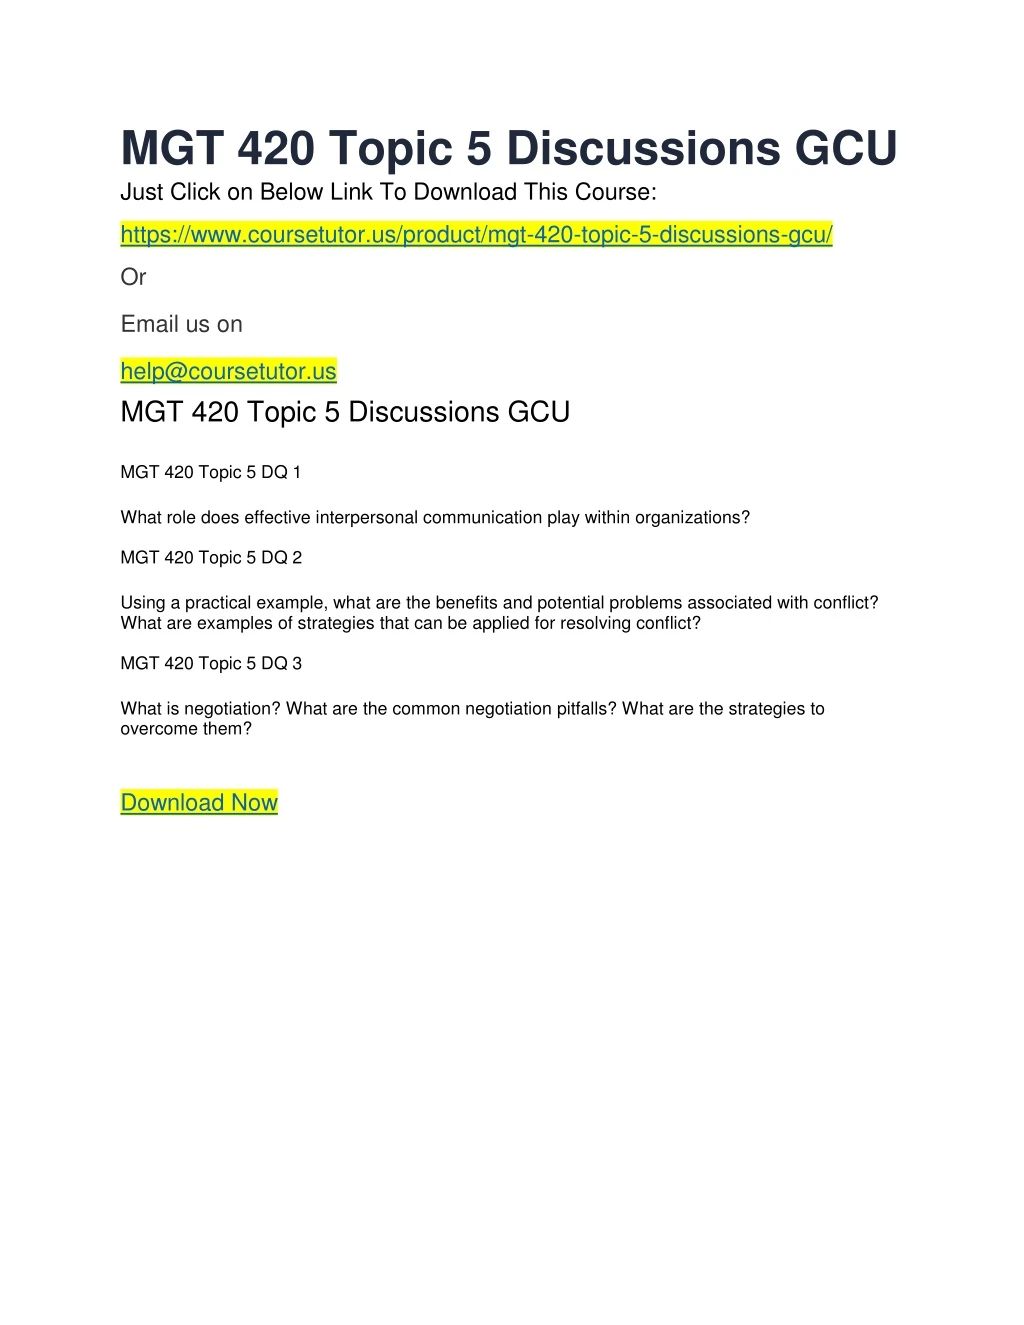 mgt 420 topic 5 discussions gcu just click